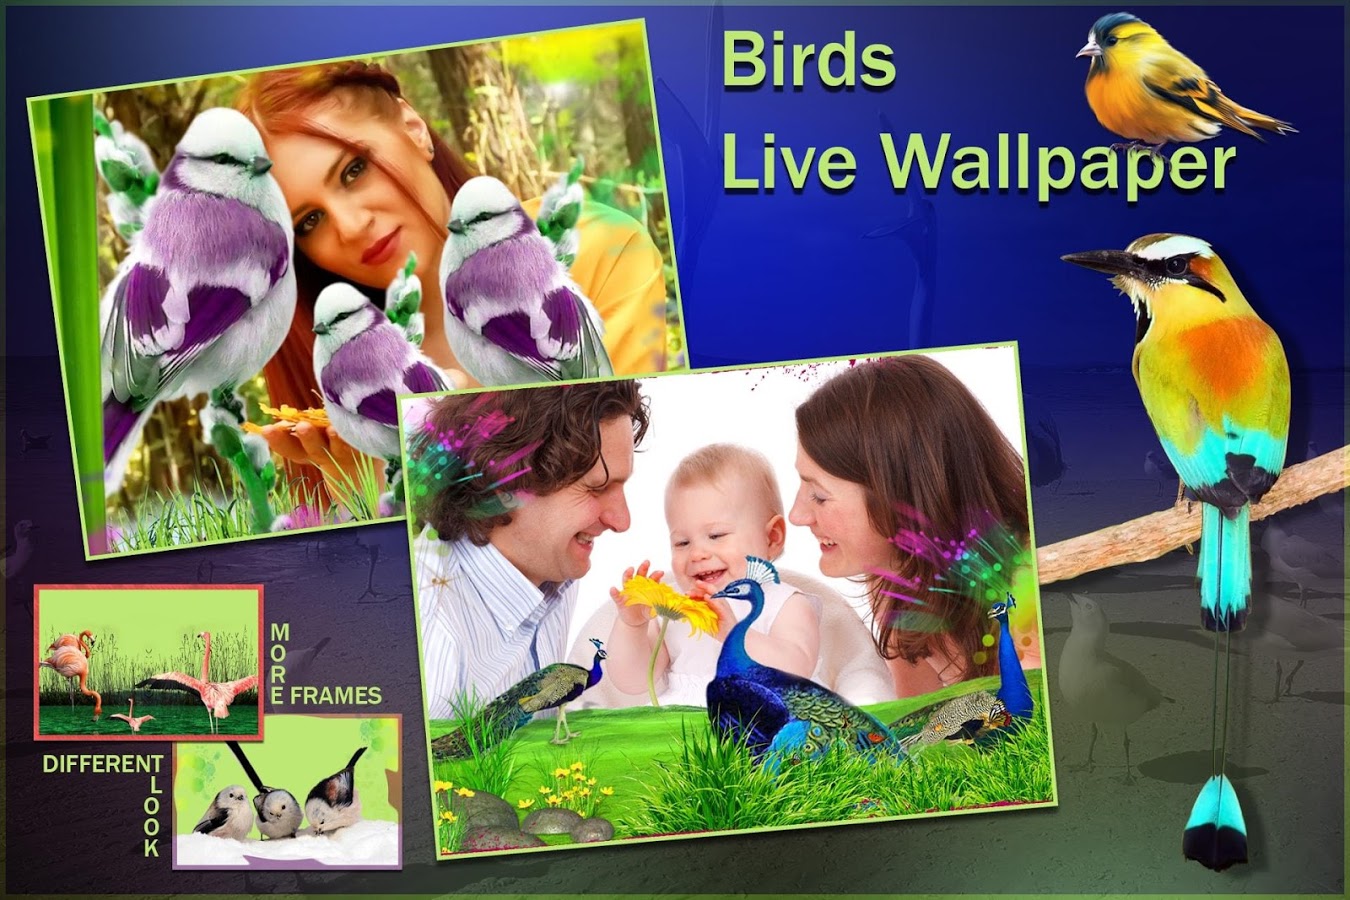 birds live wallpaper,nature,organism,adaptation,wildlife,photography